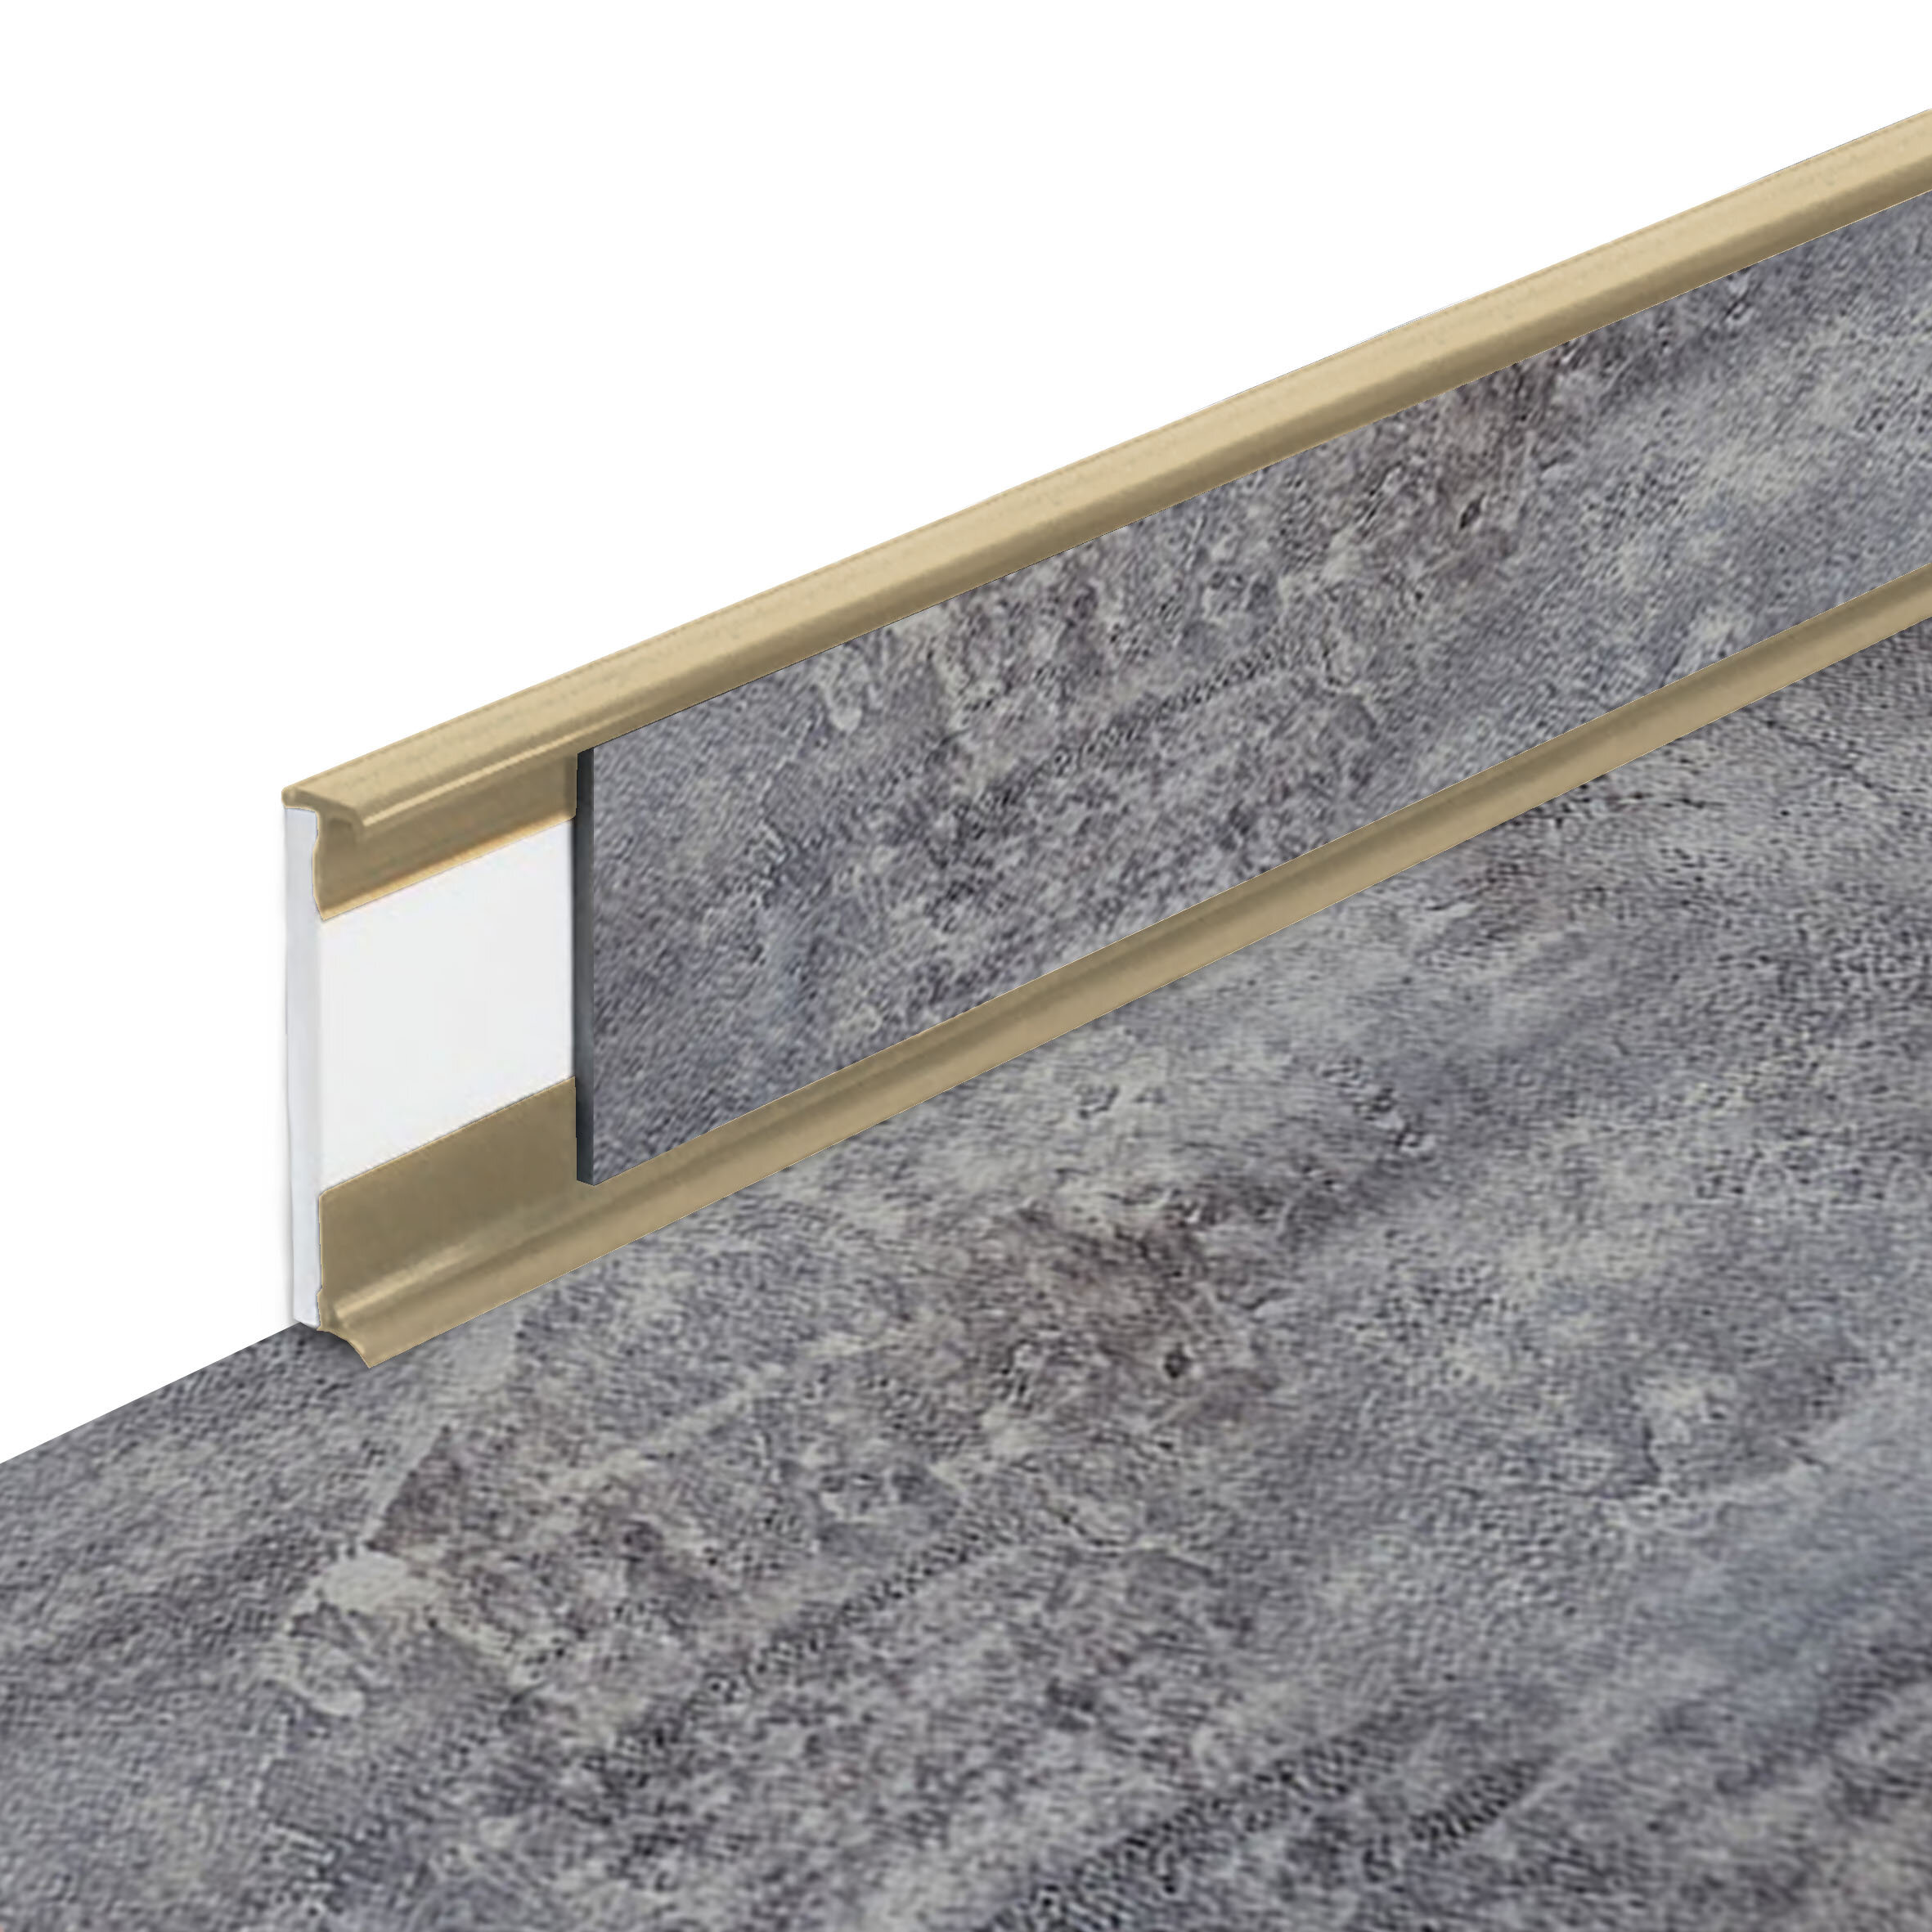 PVC vinylová soklová podlahová lišta Fortelock Business Forsen mountain peak C017 beige - délka 200 cm, výška 5,8 cm, tloušťka 1,2 cm